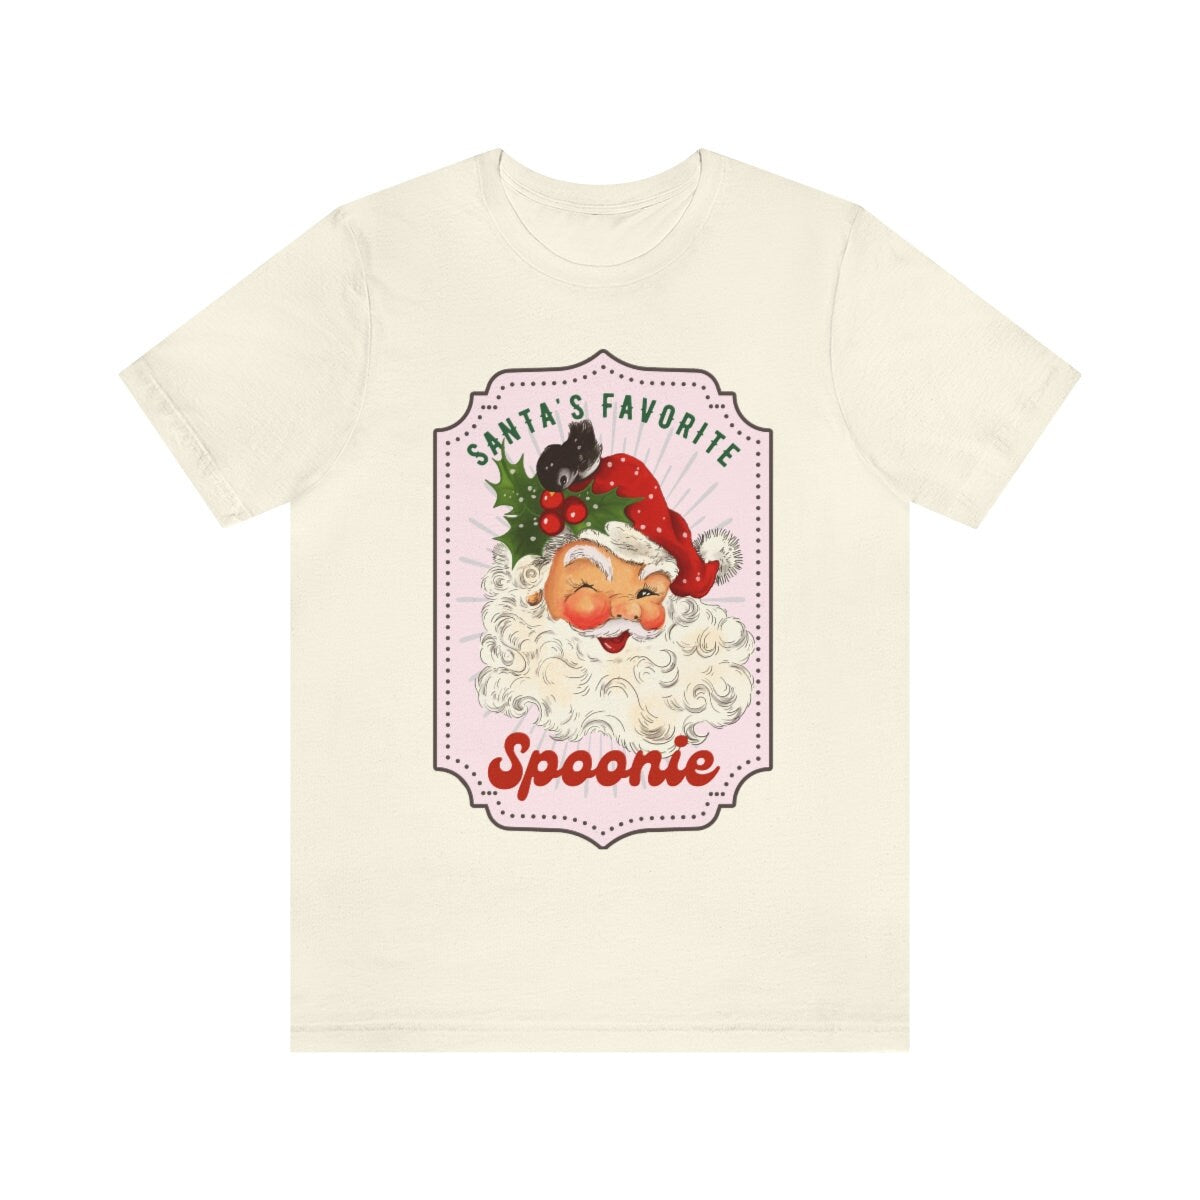 Santa's favorite spoonie shirt